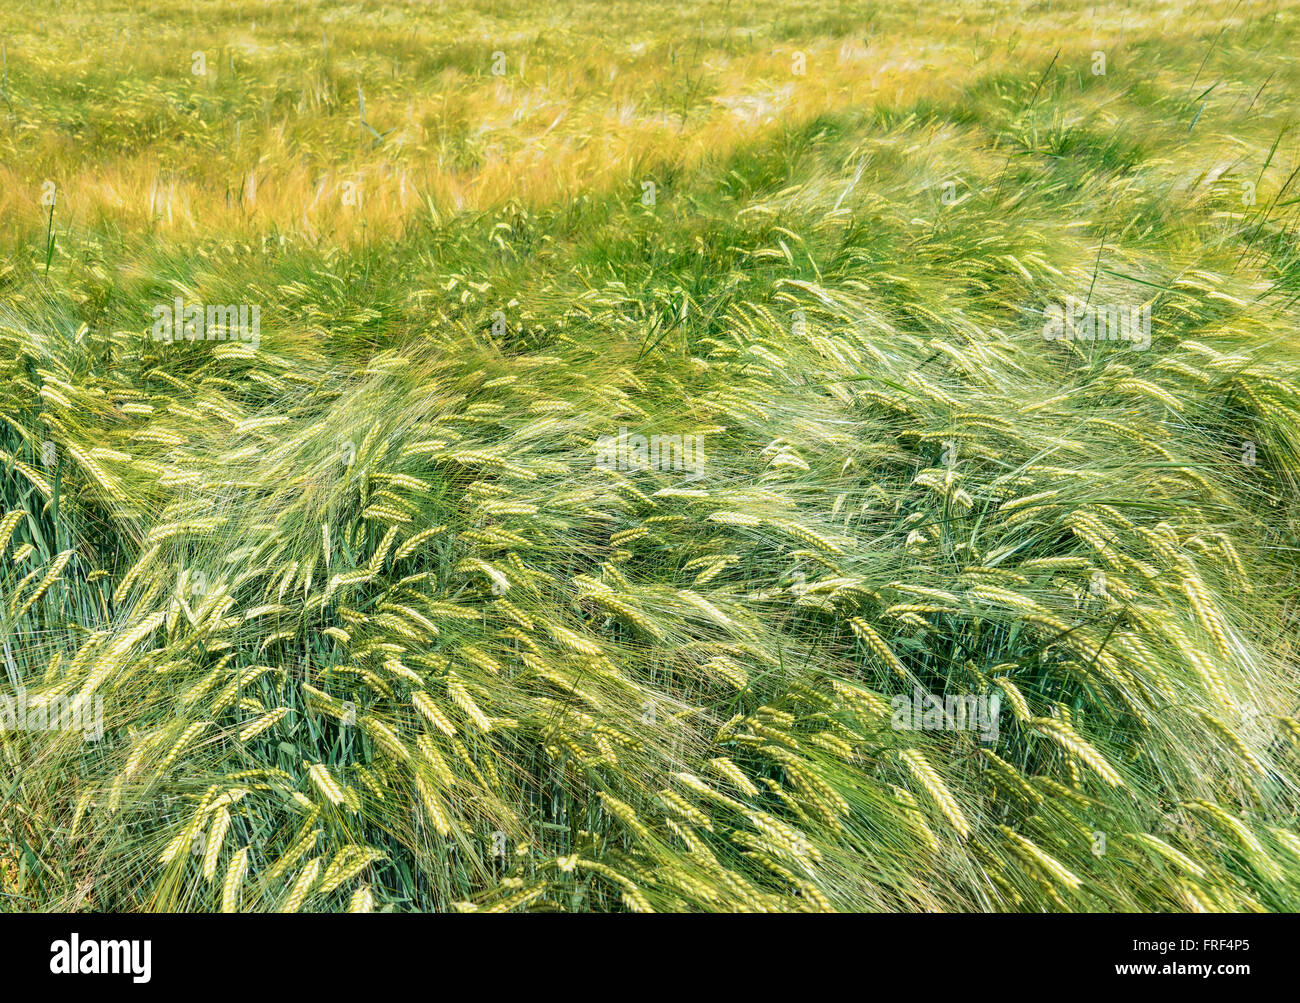 Green barley in a field in summer Stock Photo